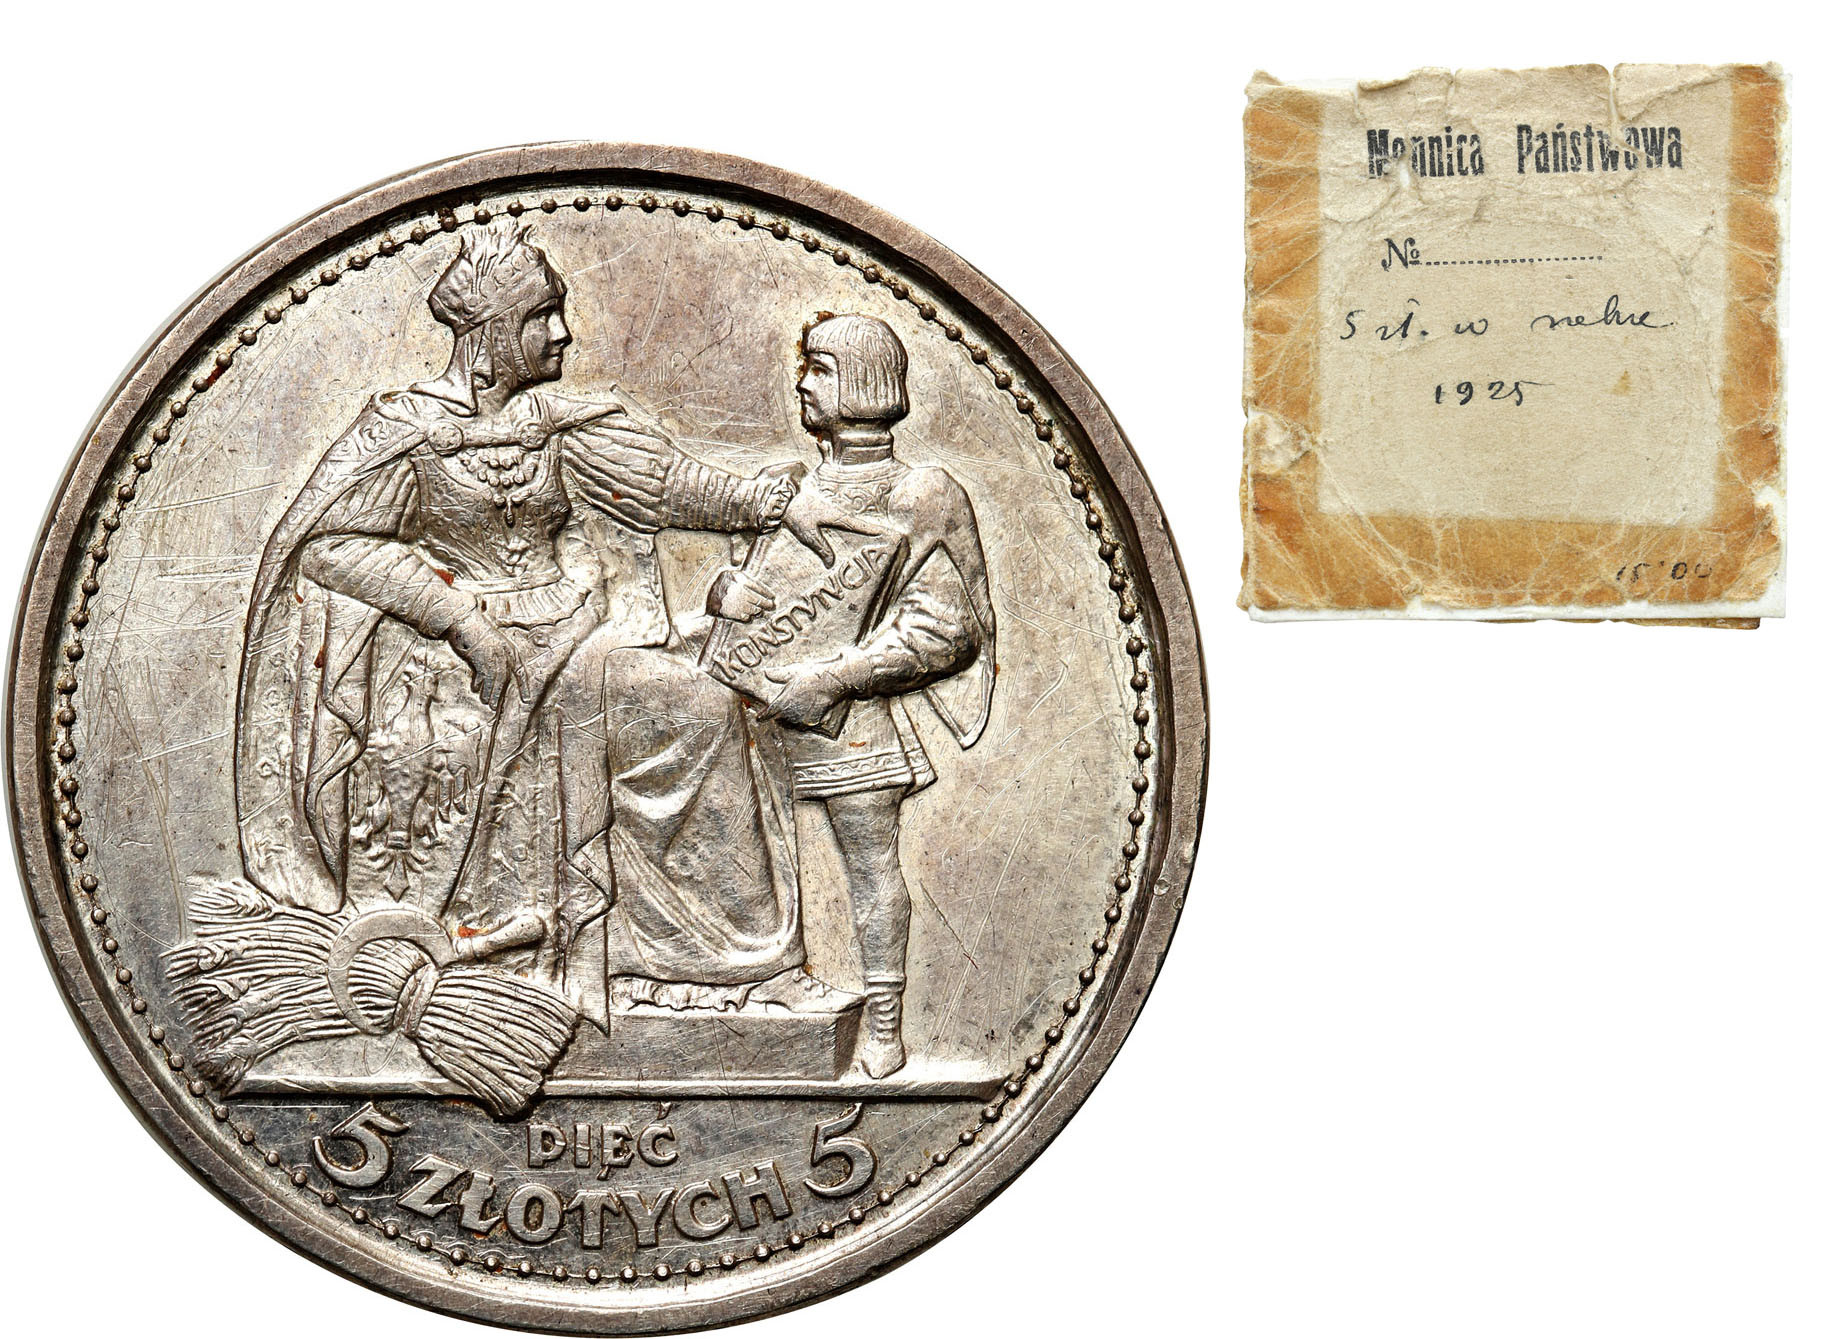 PRÓBA srebro, 5 złotych 1925, Konstytucja - 100 perełek - z oryginalną kopertką